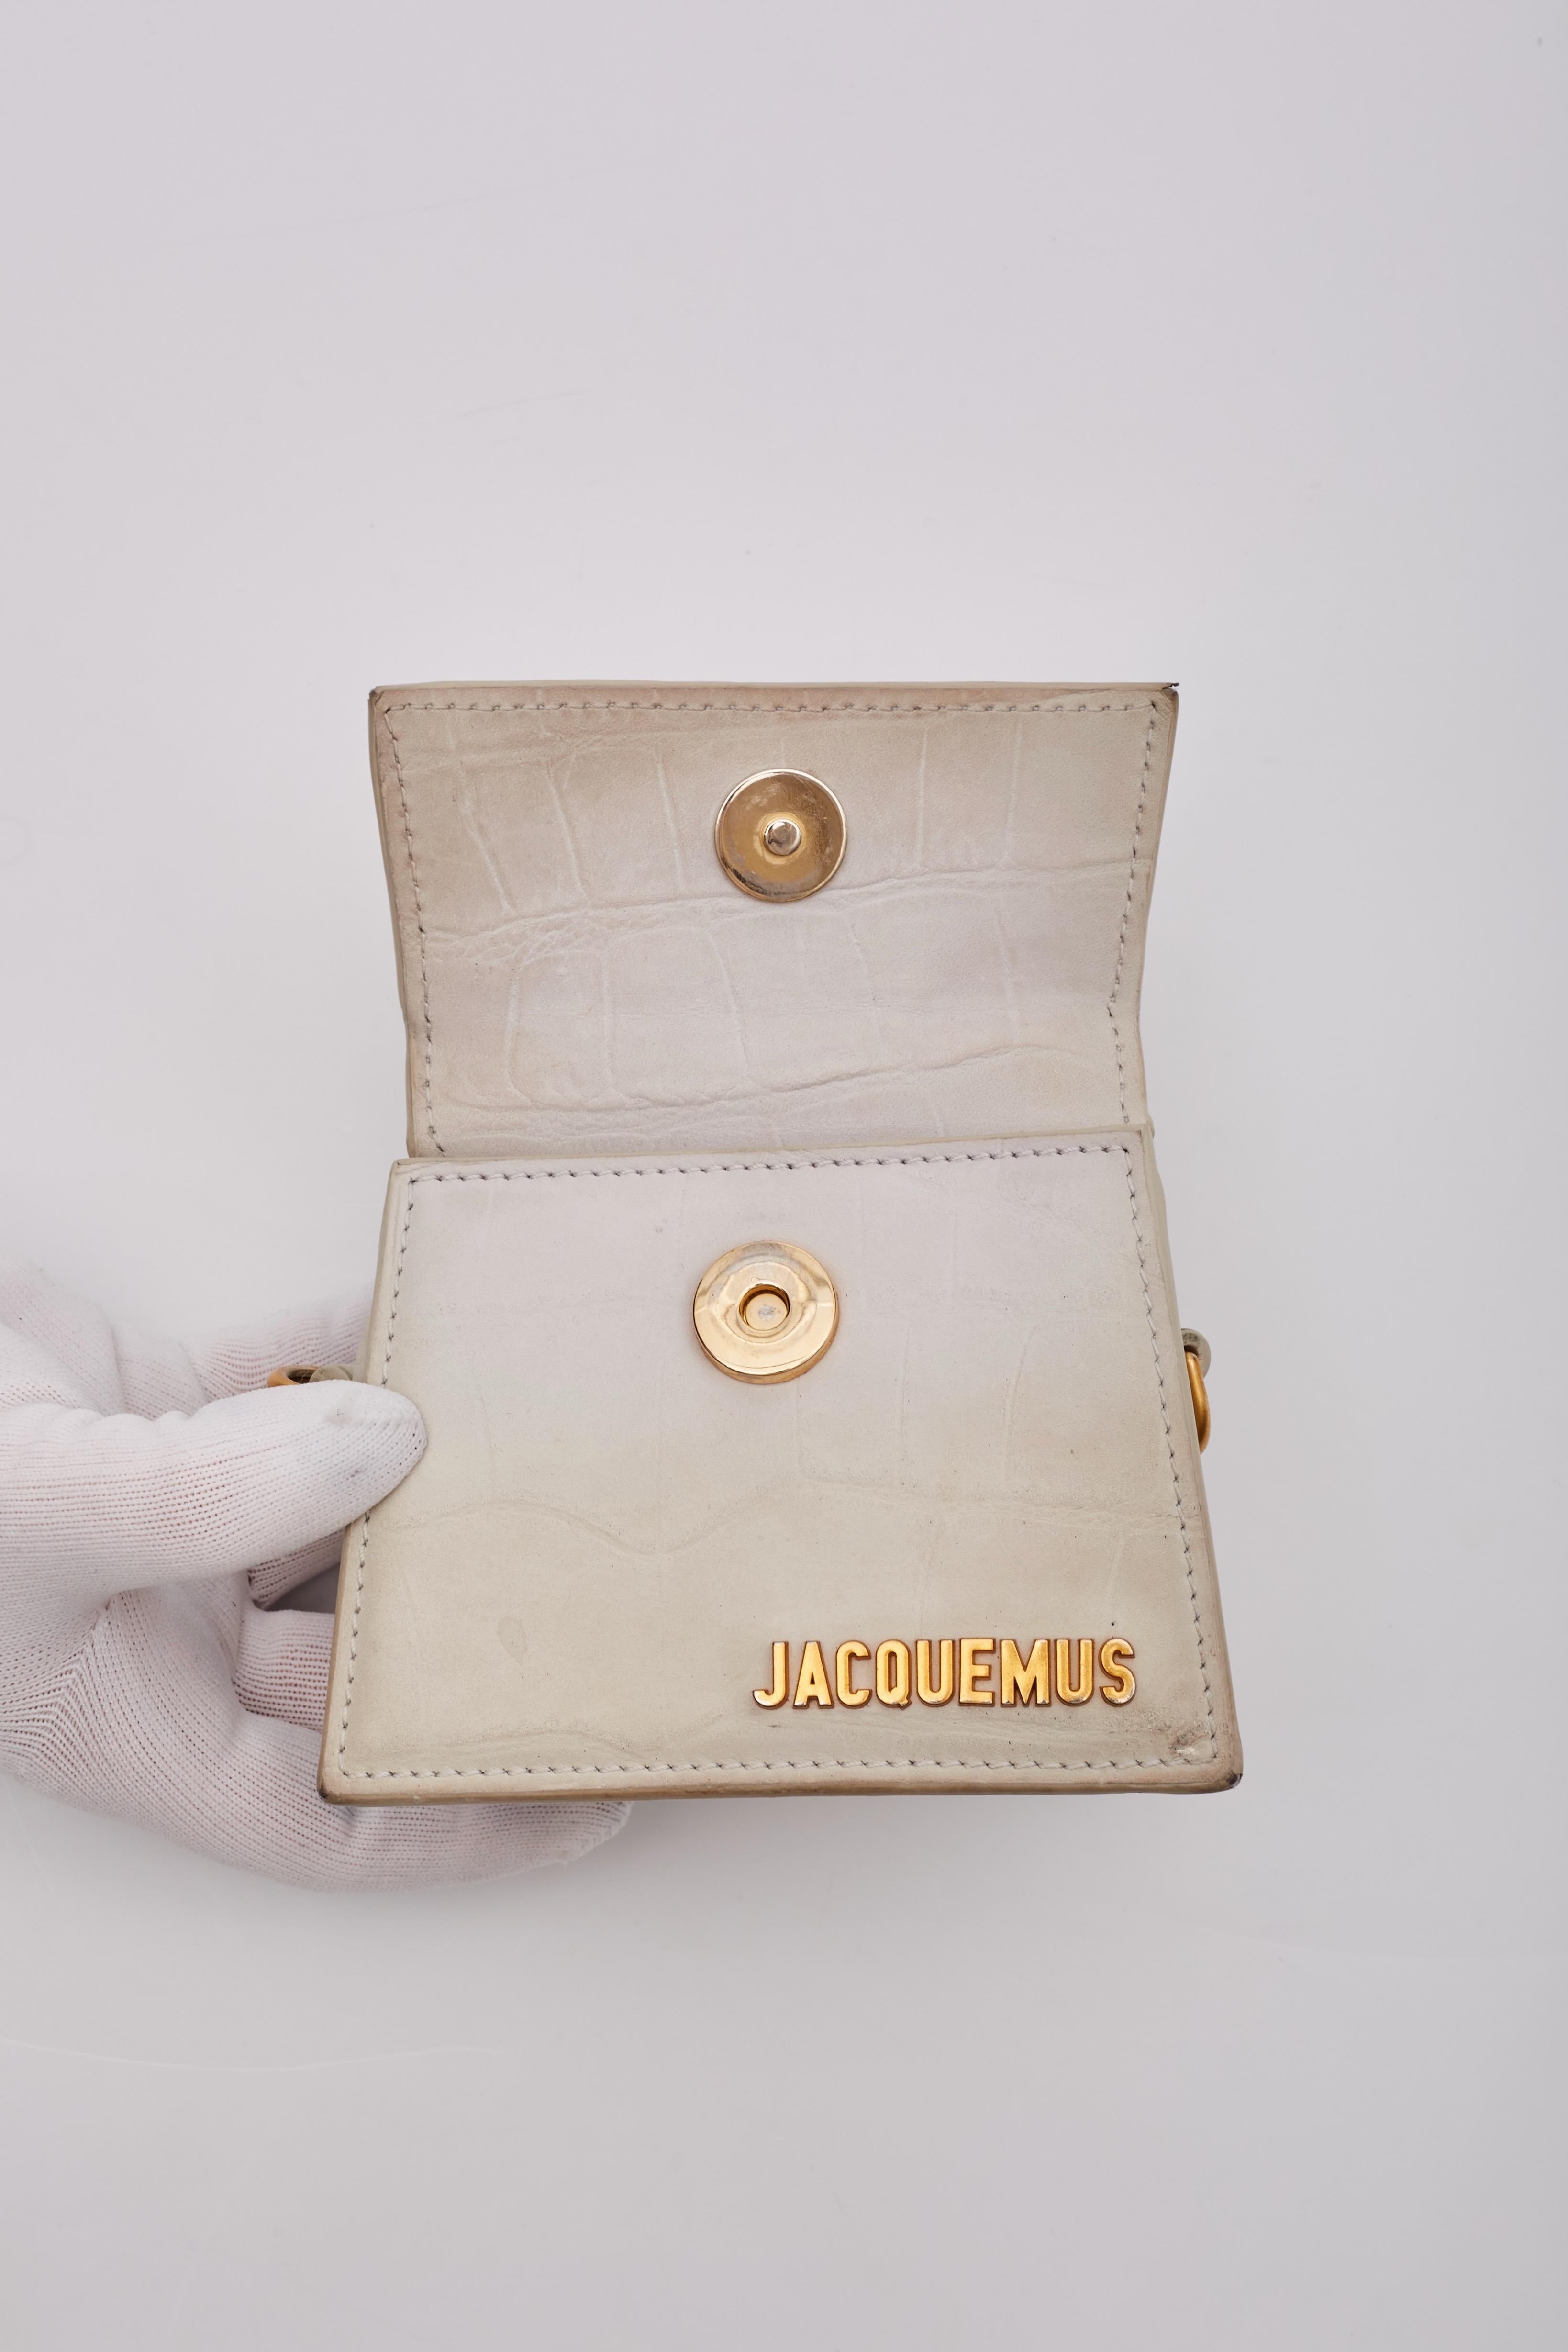 Jacquemus Off White Croc Mini Le Chiquito Clutch Bag 4